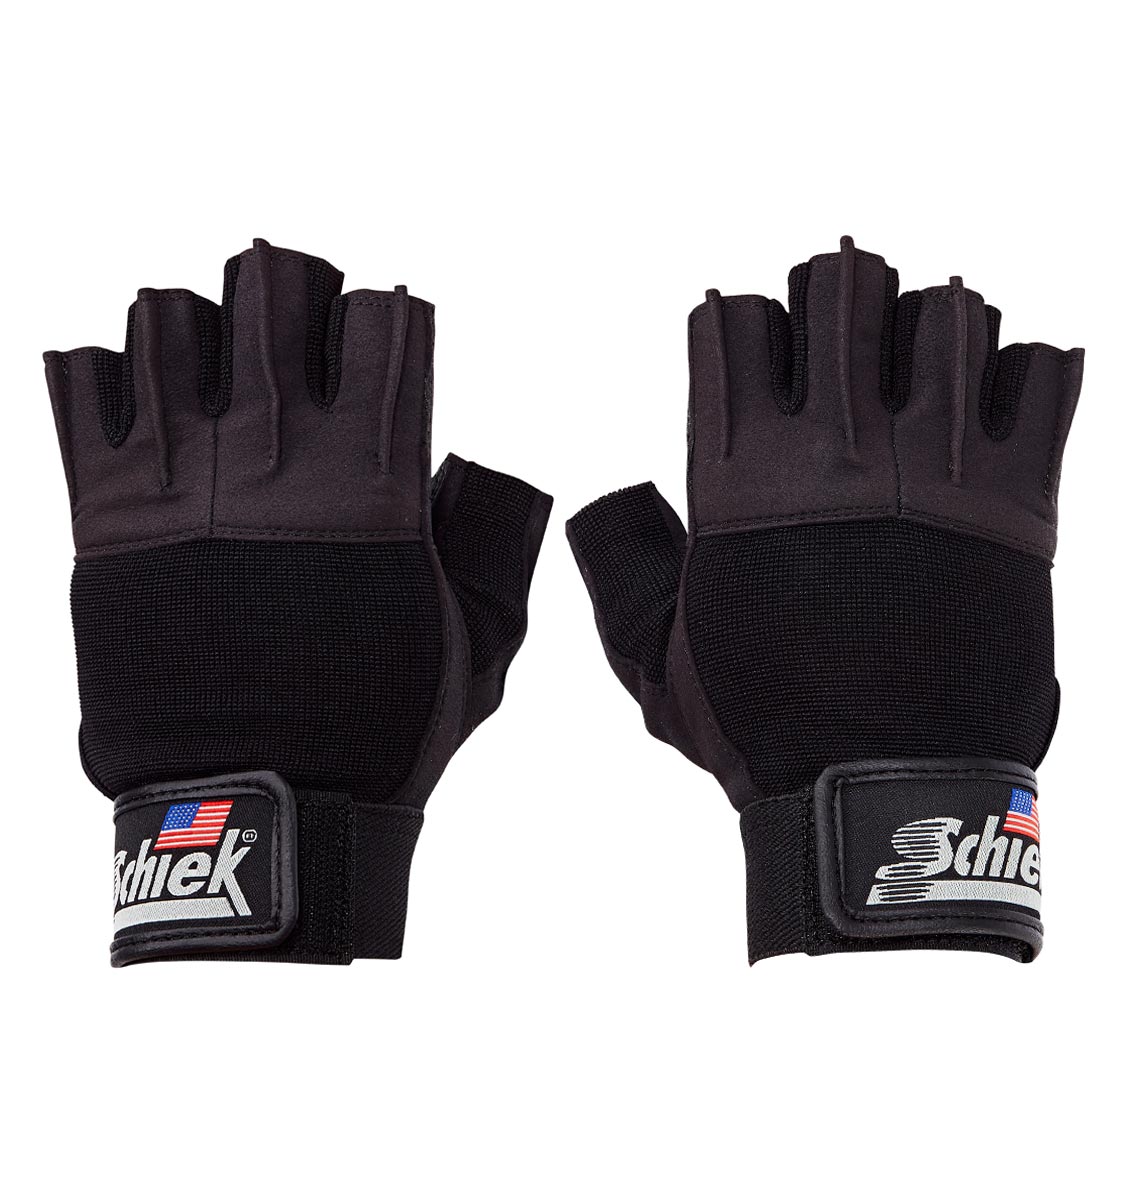 520 Schiek Womens Platinum Series Lifting Gym Gloves with Fins Pair Top